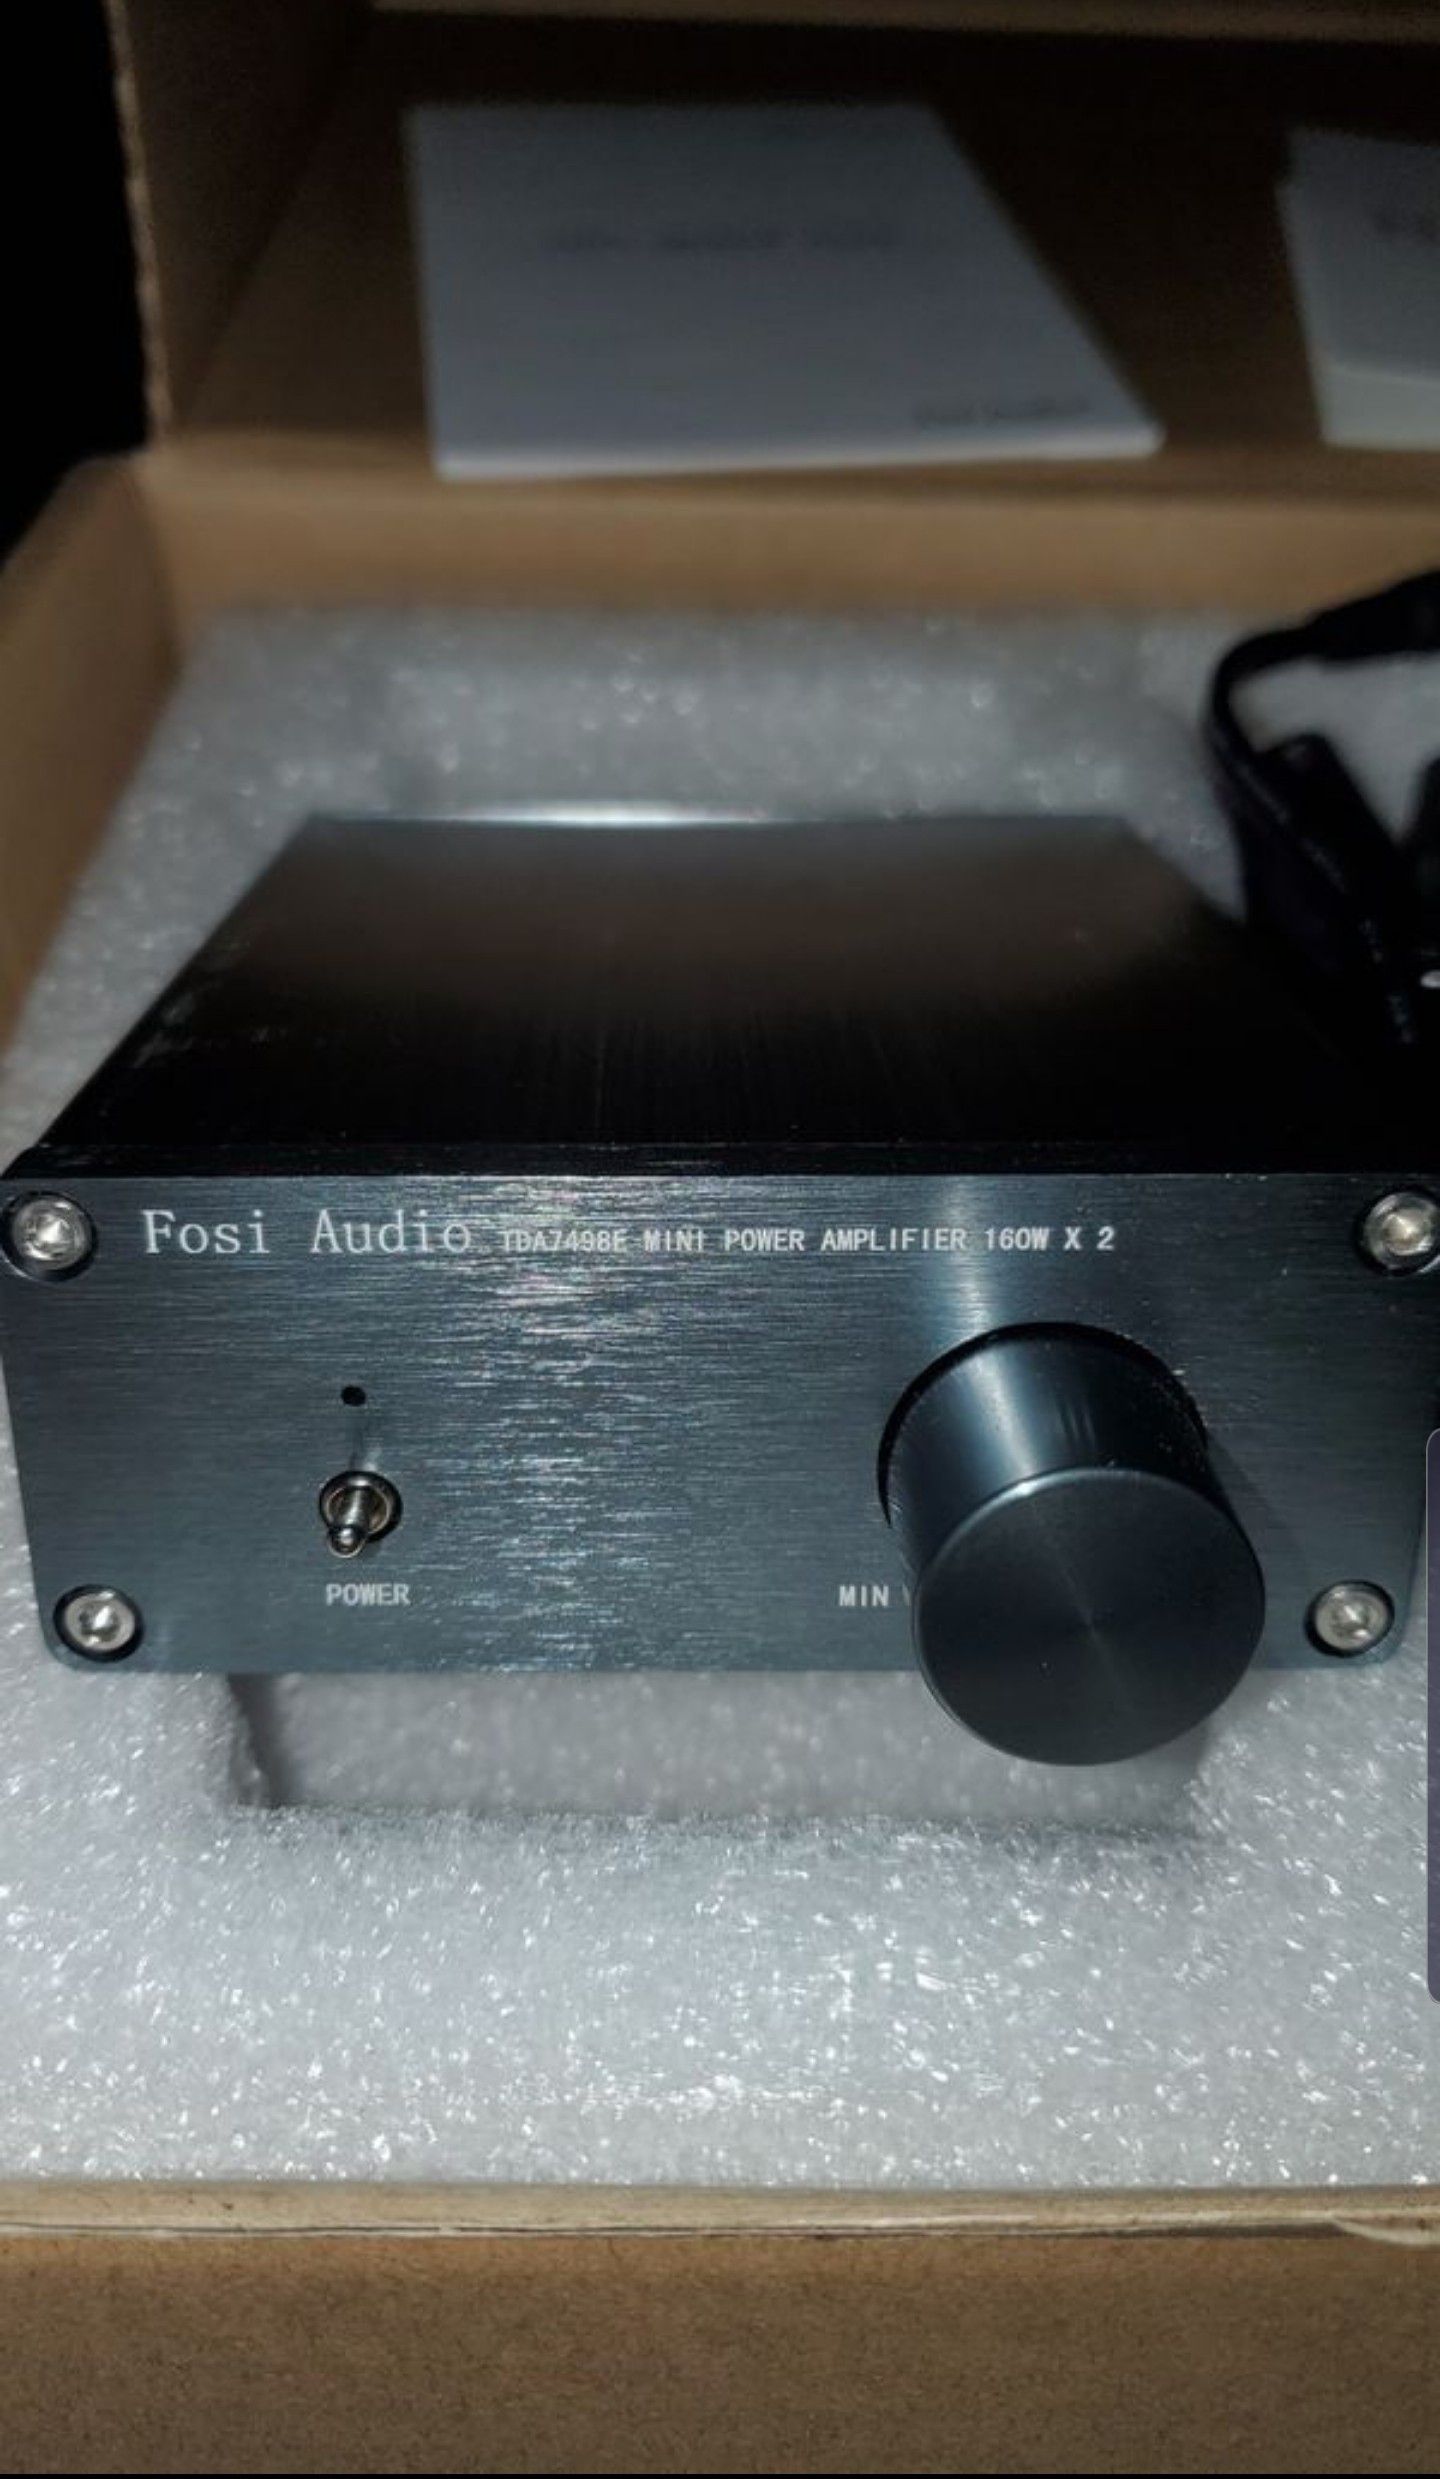 Digital Amp for Home Speakers